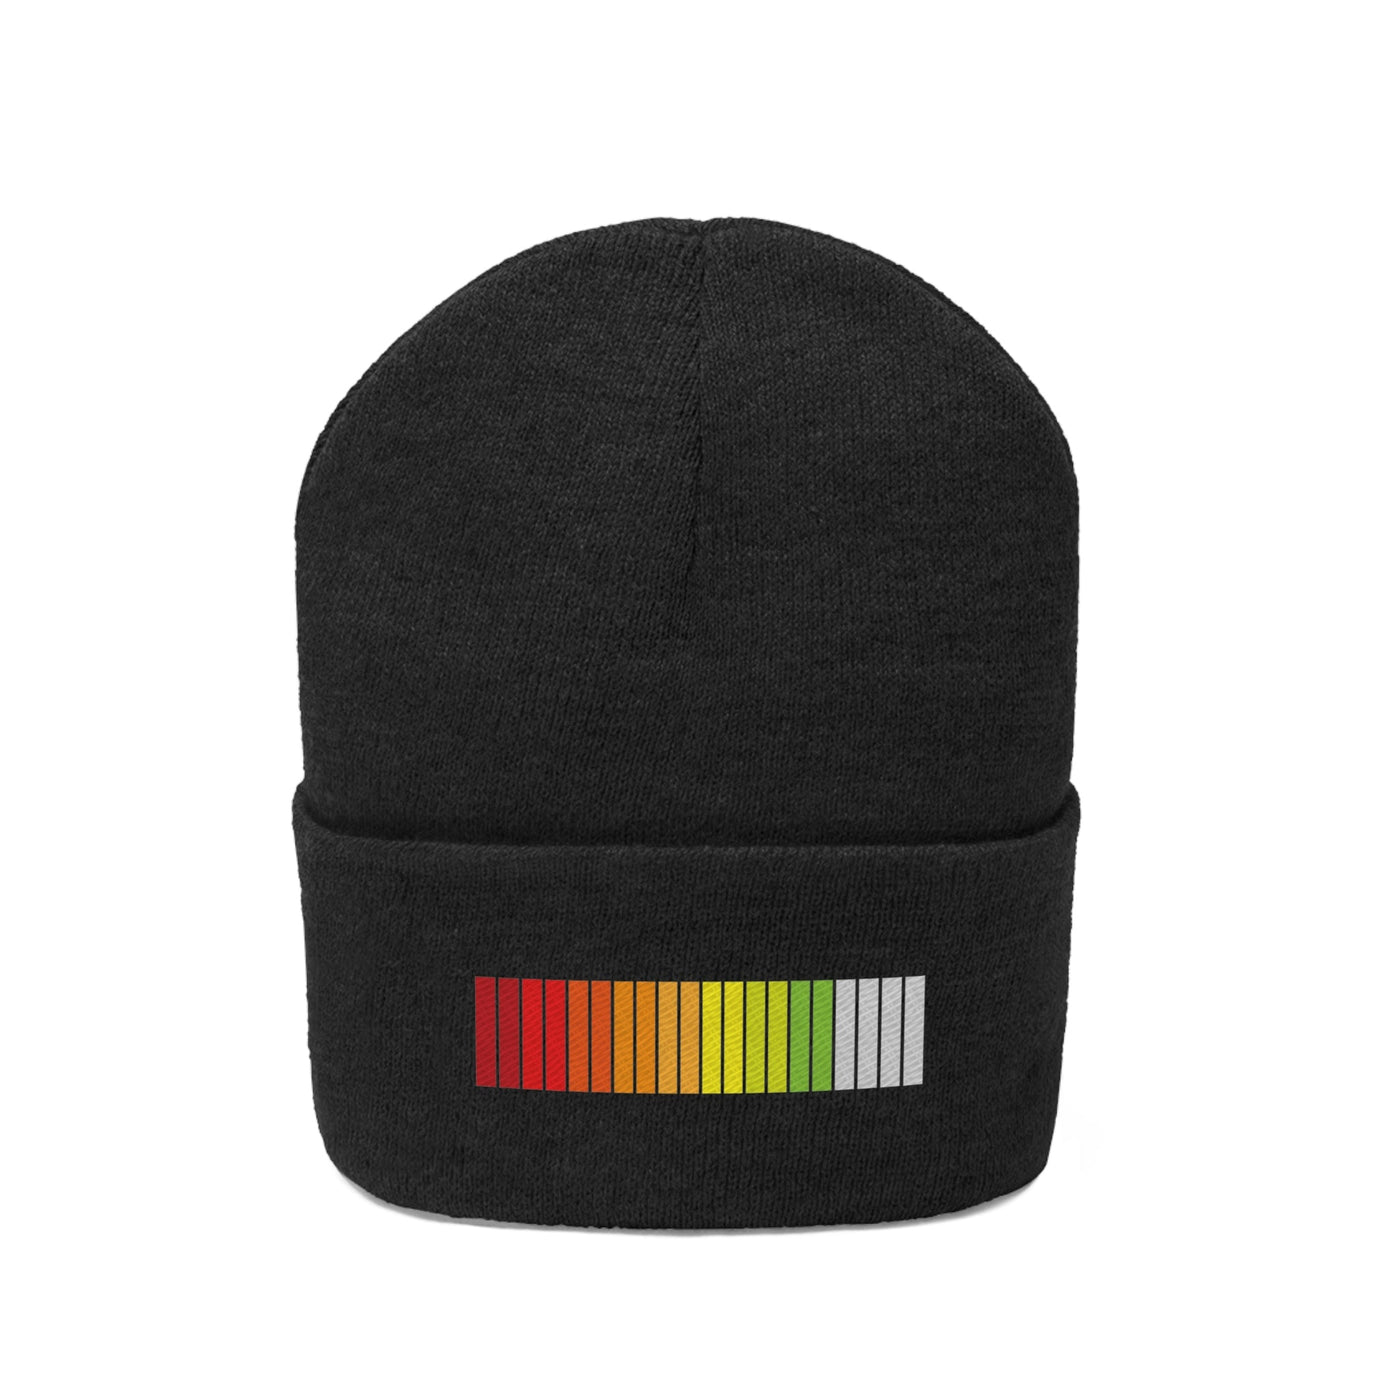 The Life Bar Gamer Knitted Black Beanie Hat